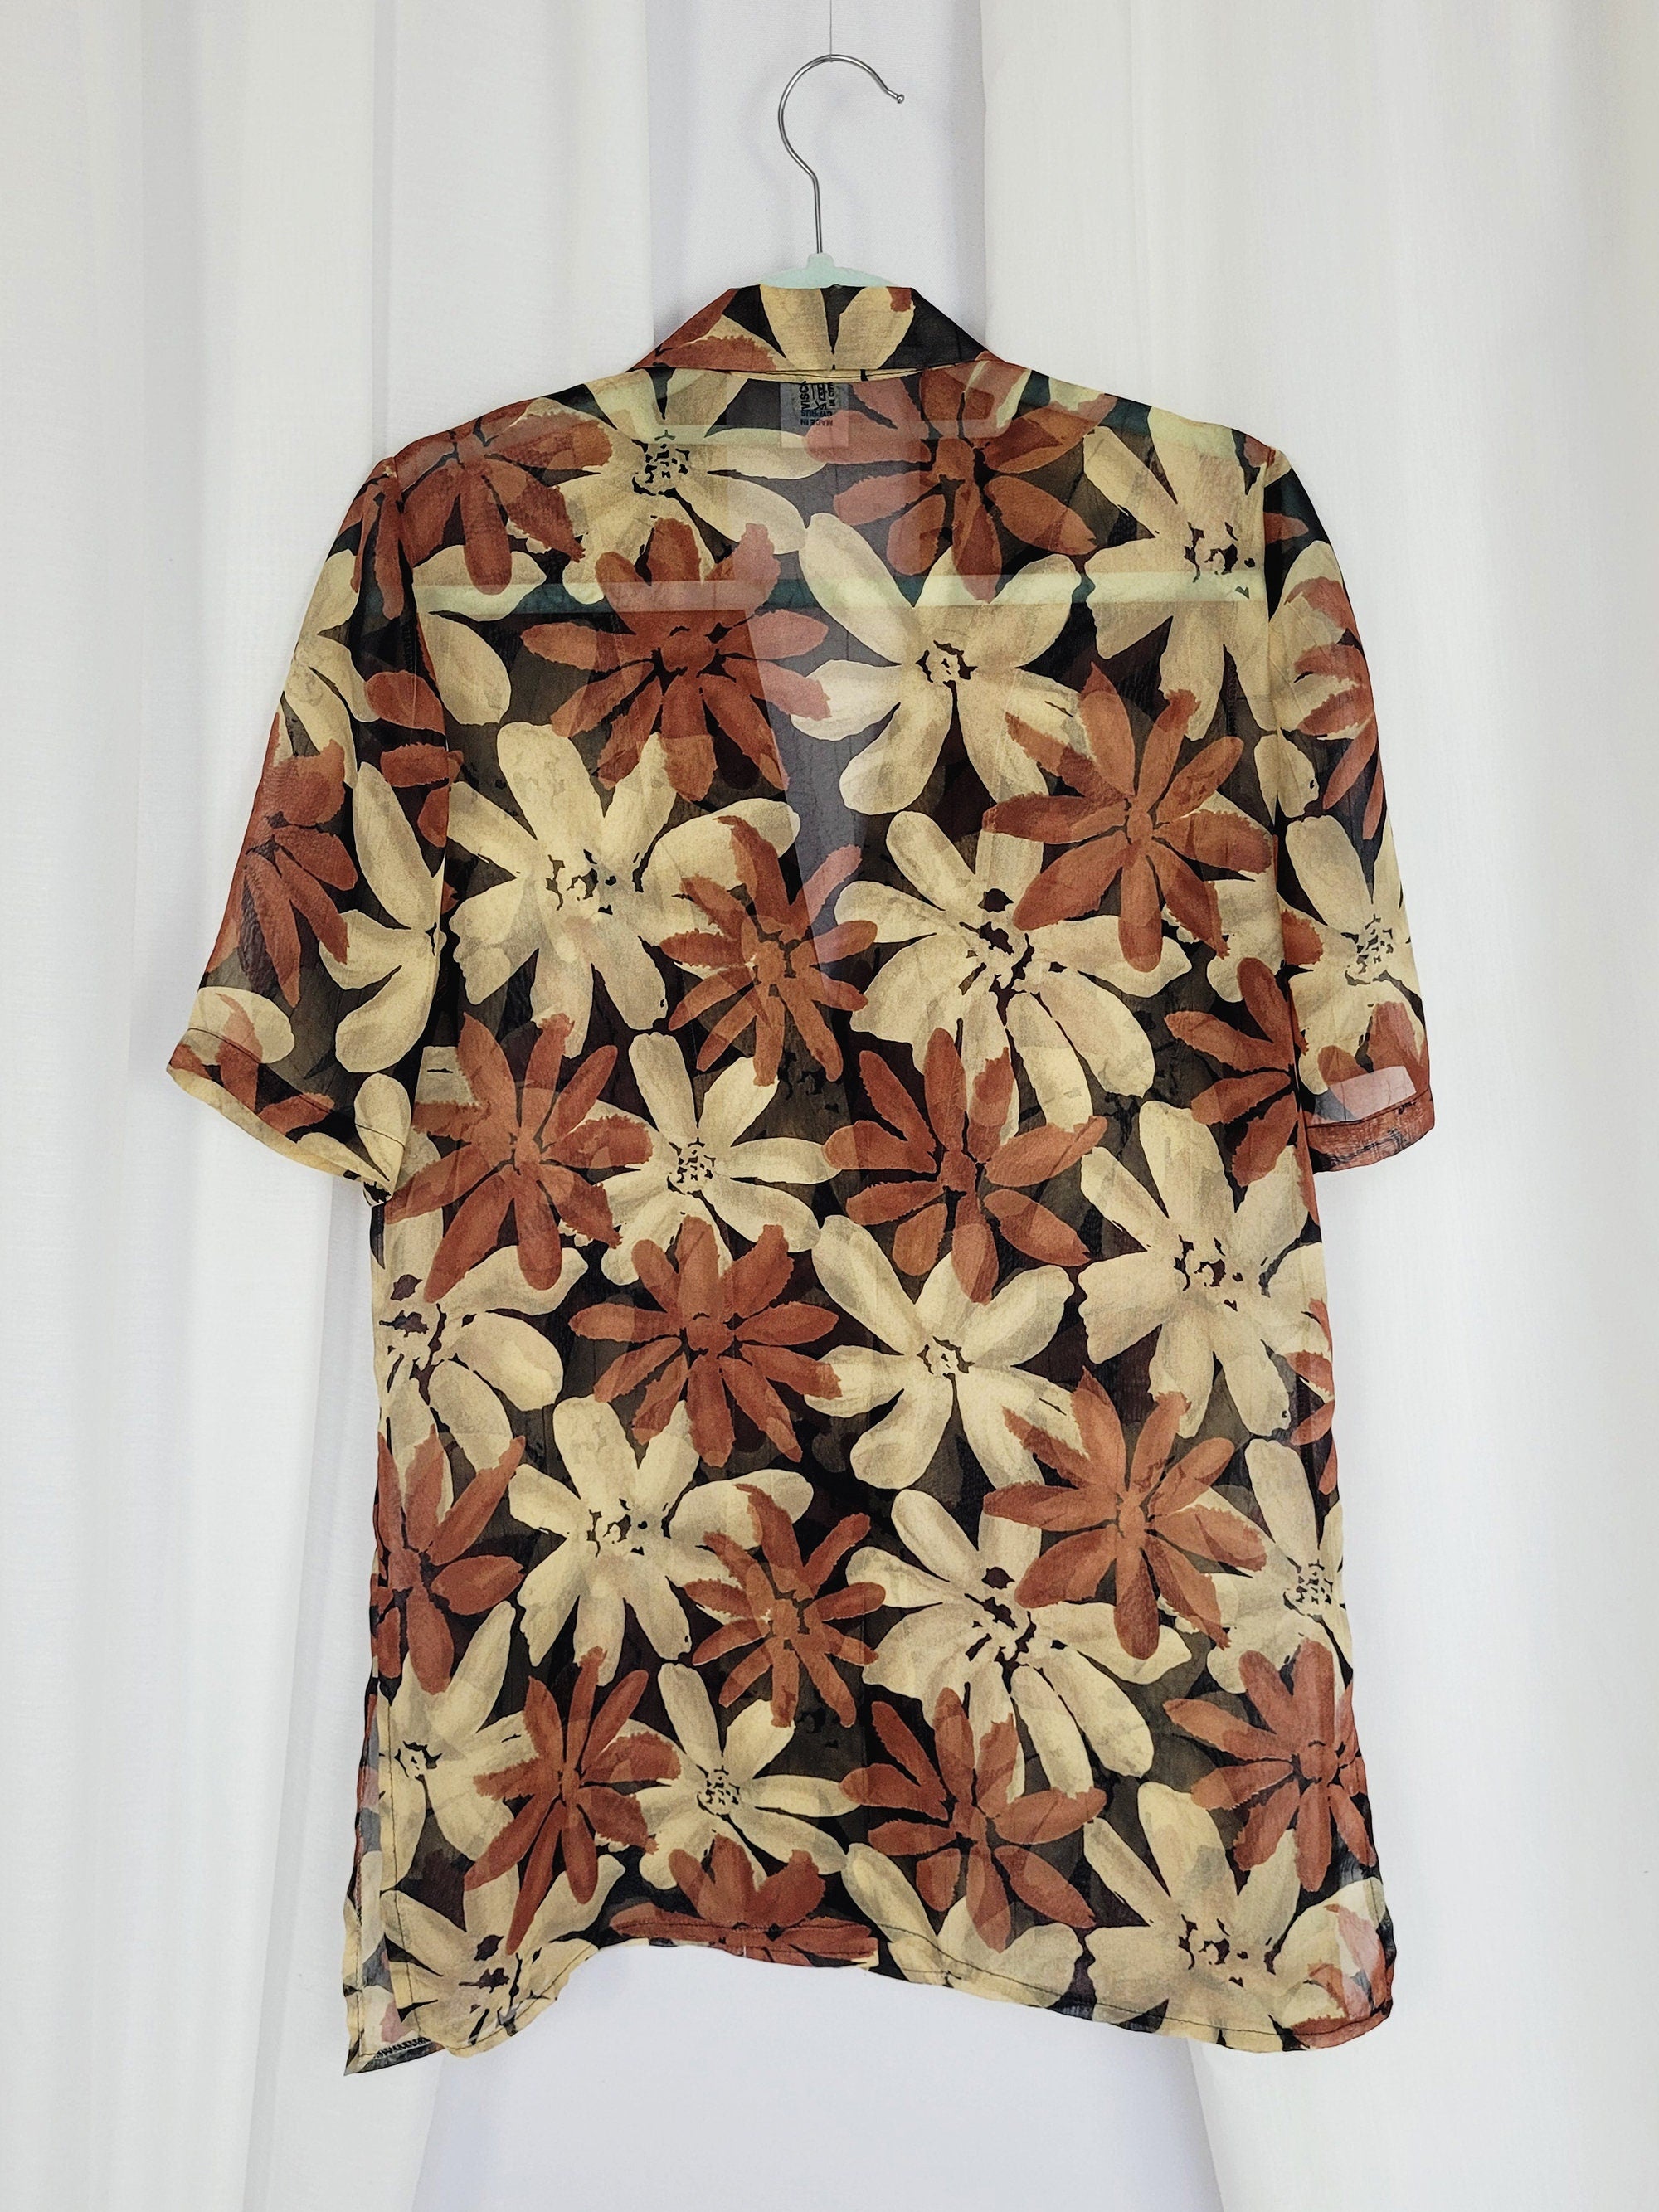 90s retro sheer brown floral short sleeve long blouse top